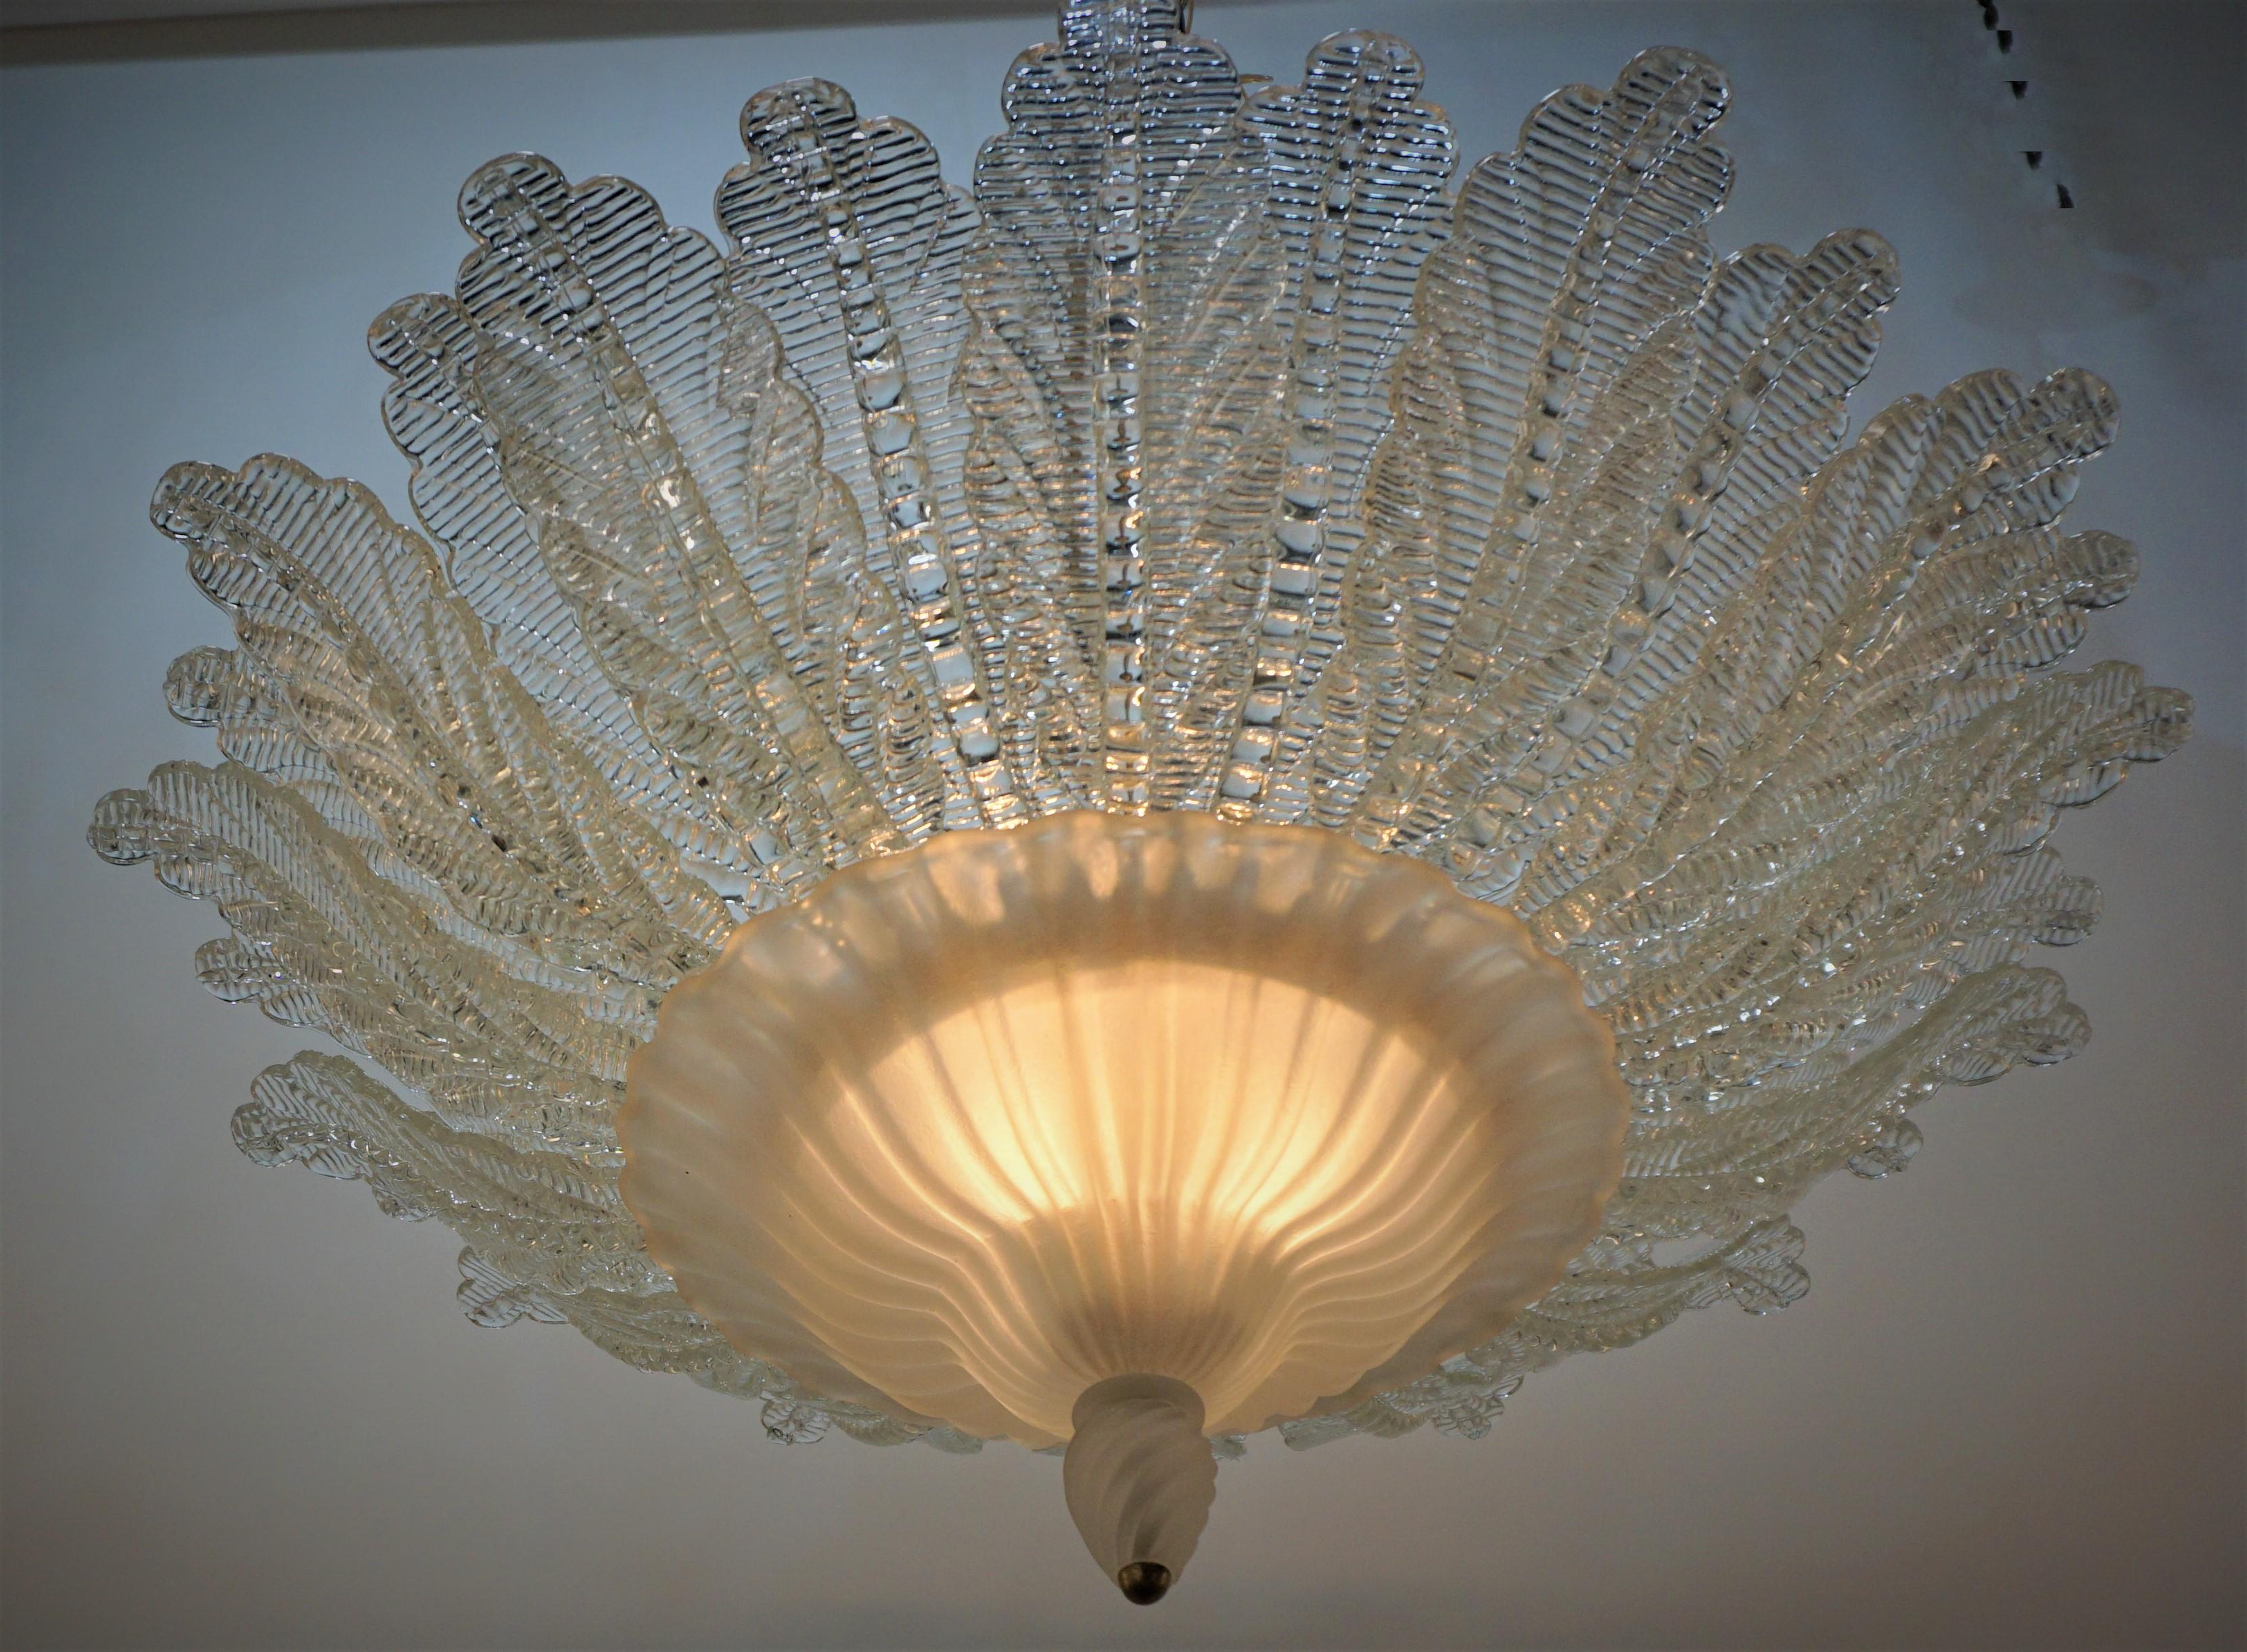 Murano blown glass leaf design 1970's semi flush mount chandelier.
Height is 25